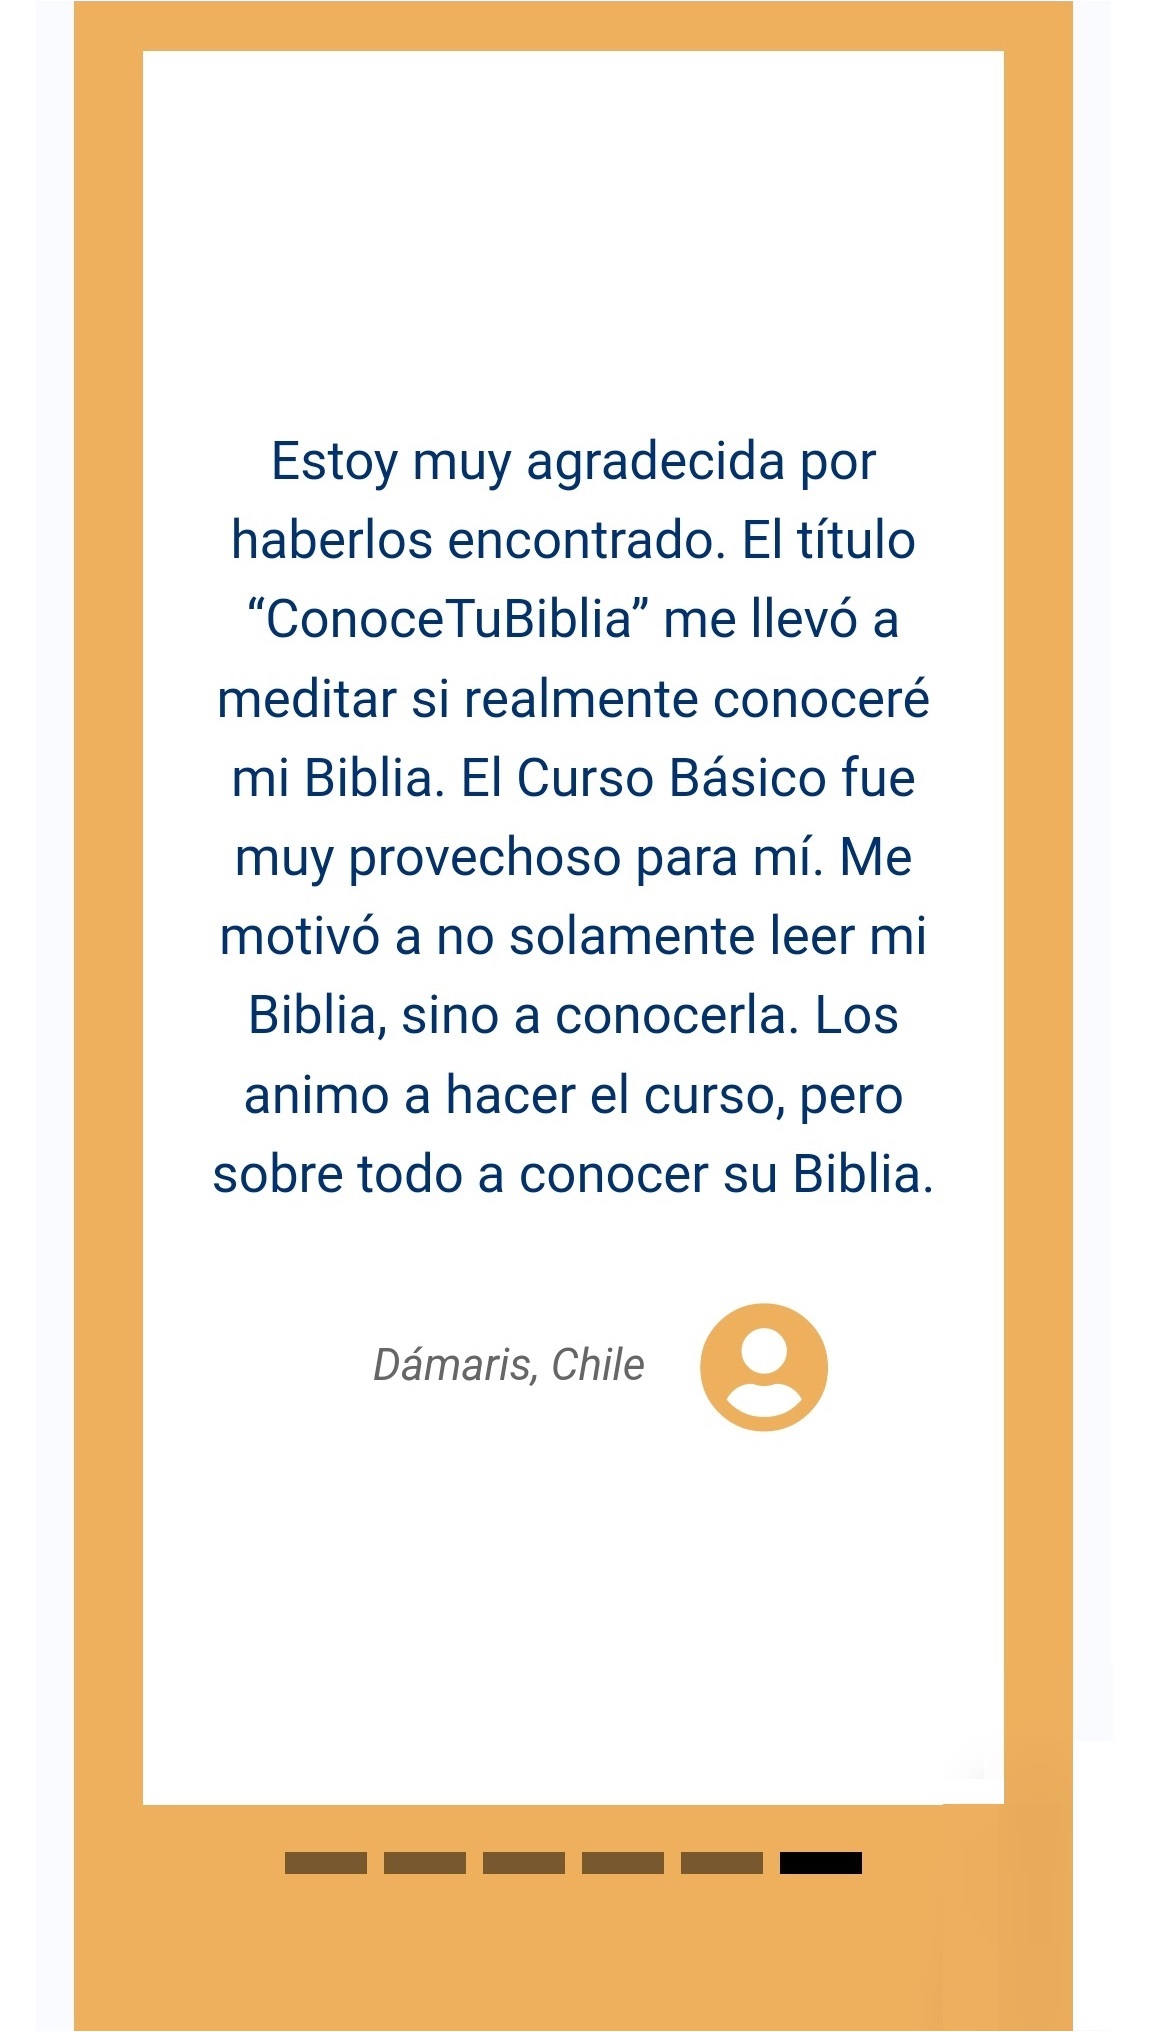 Testimonio desde Chile